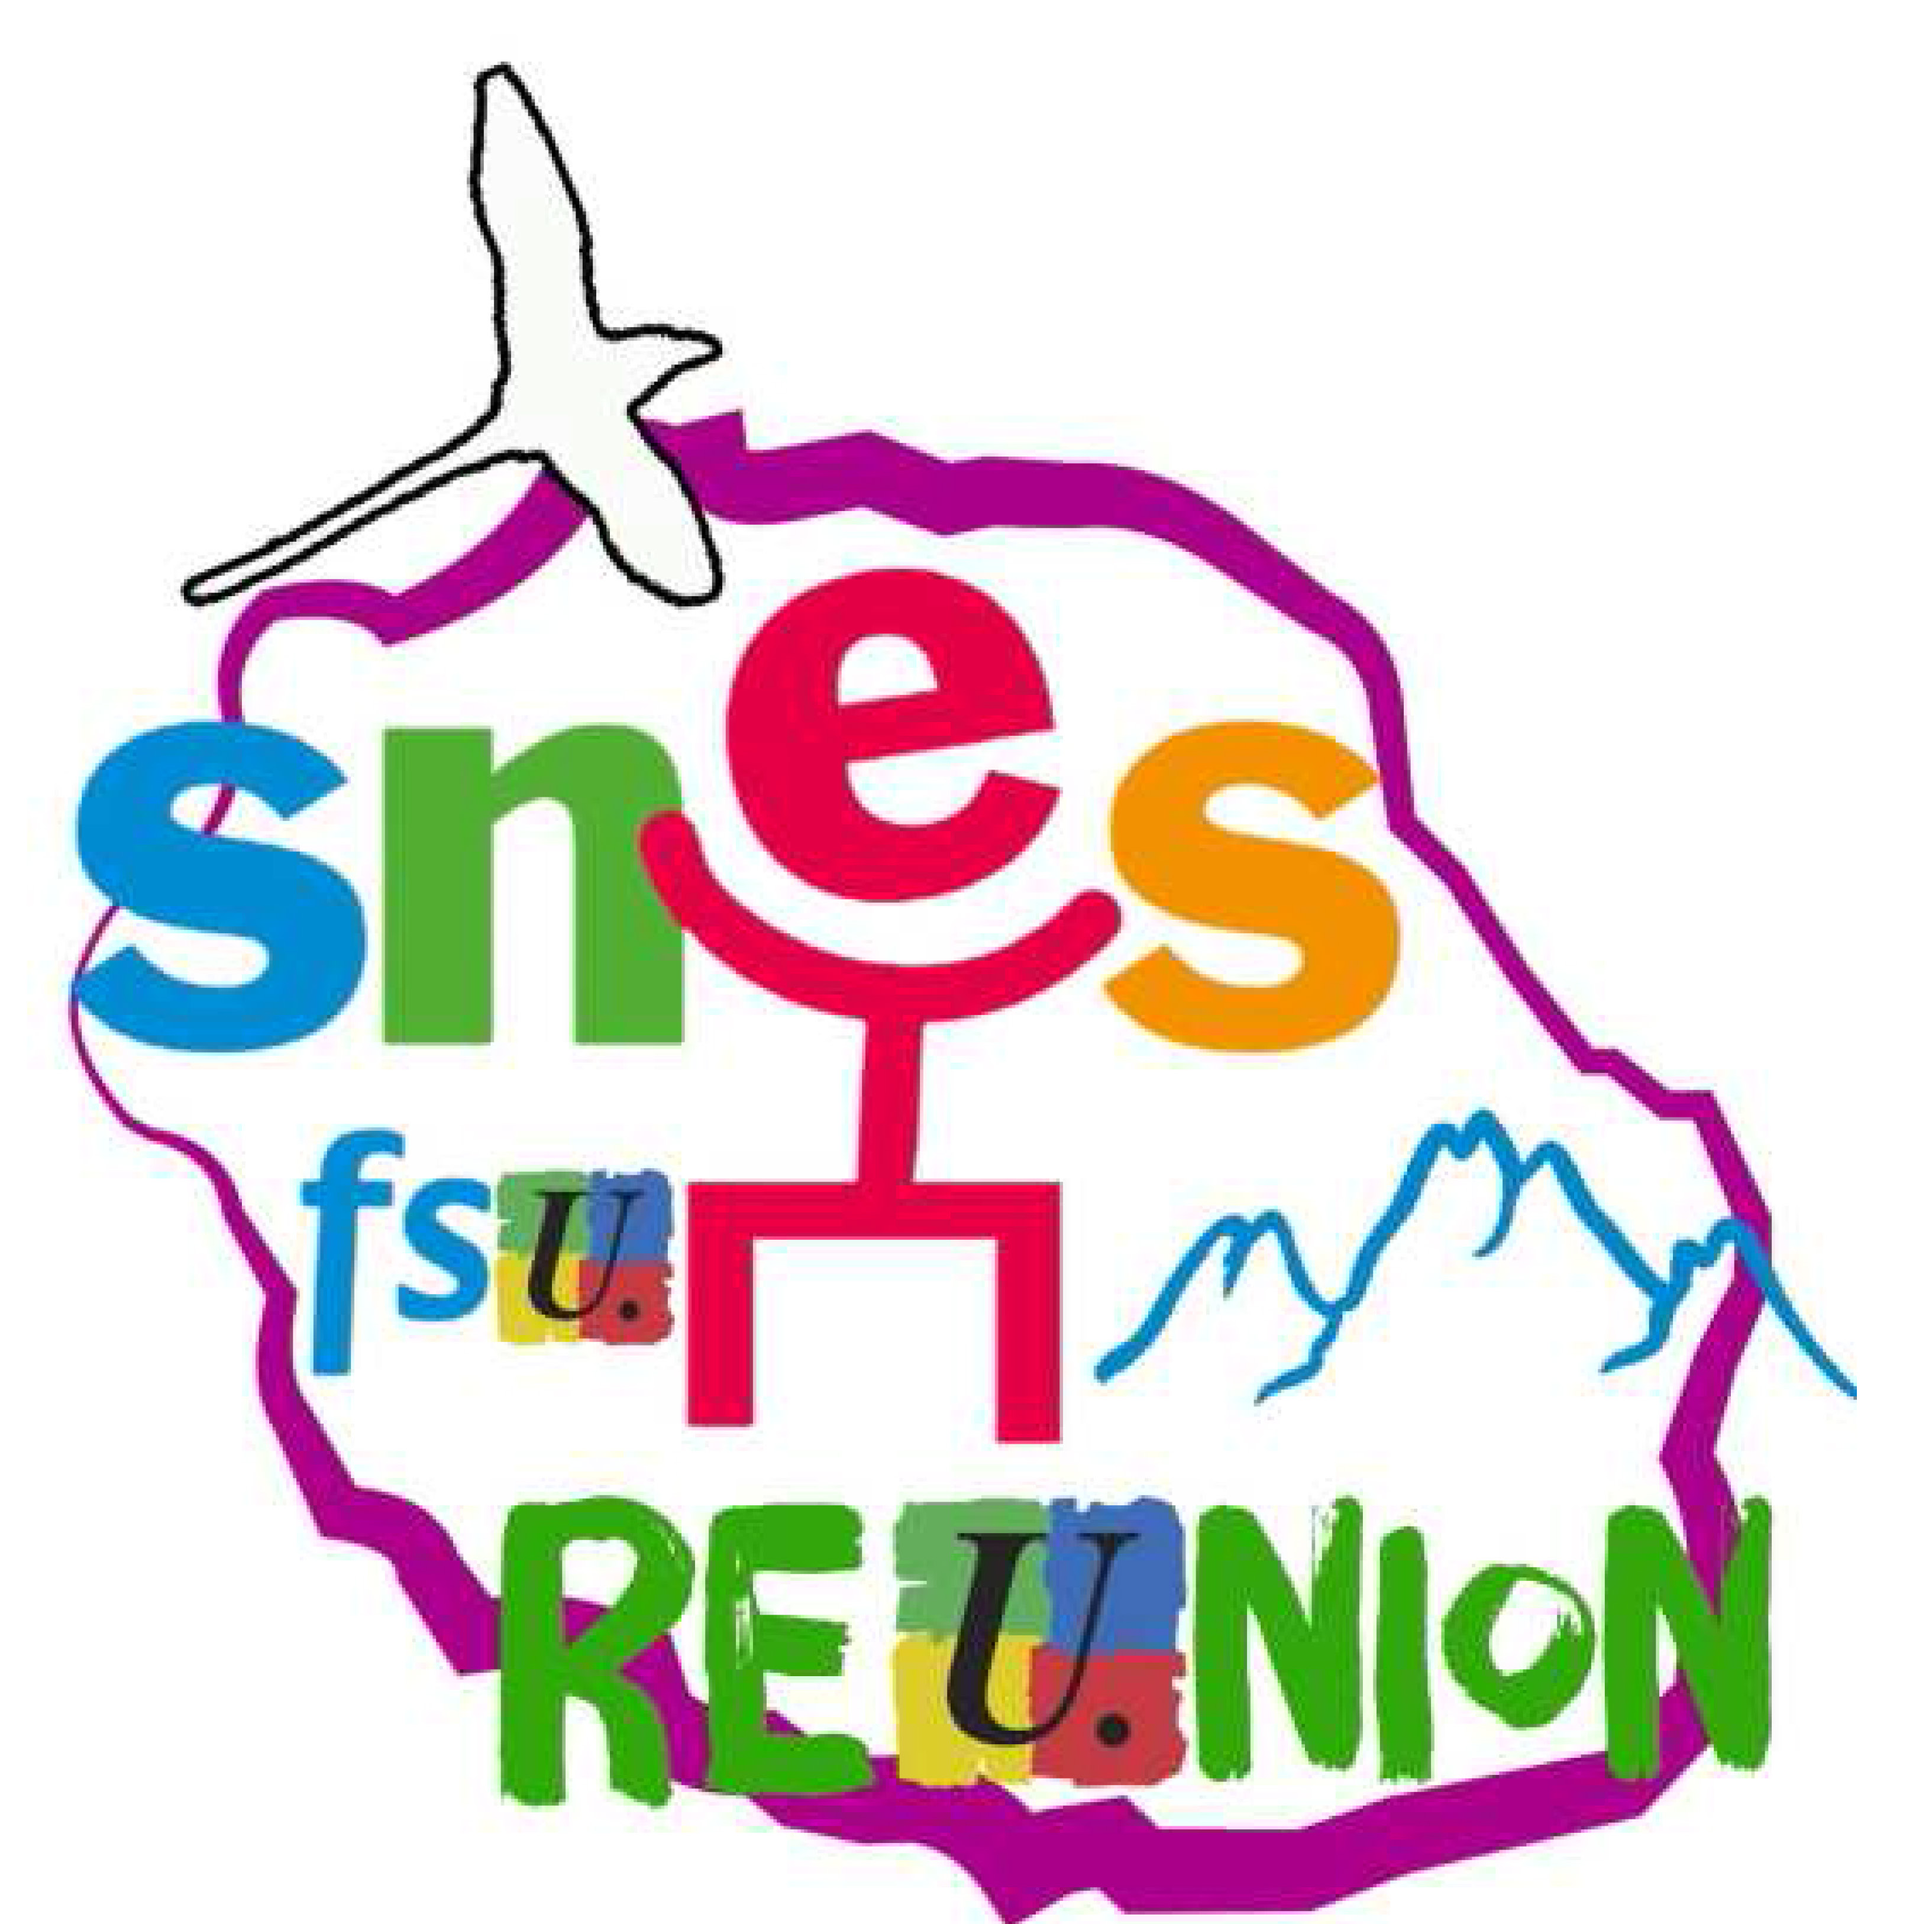 Snes-Fsu Réunion